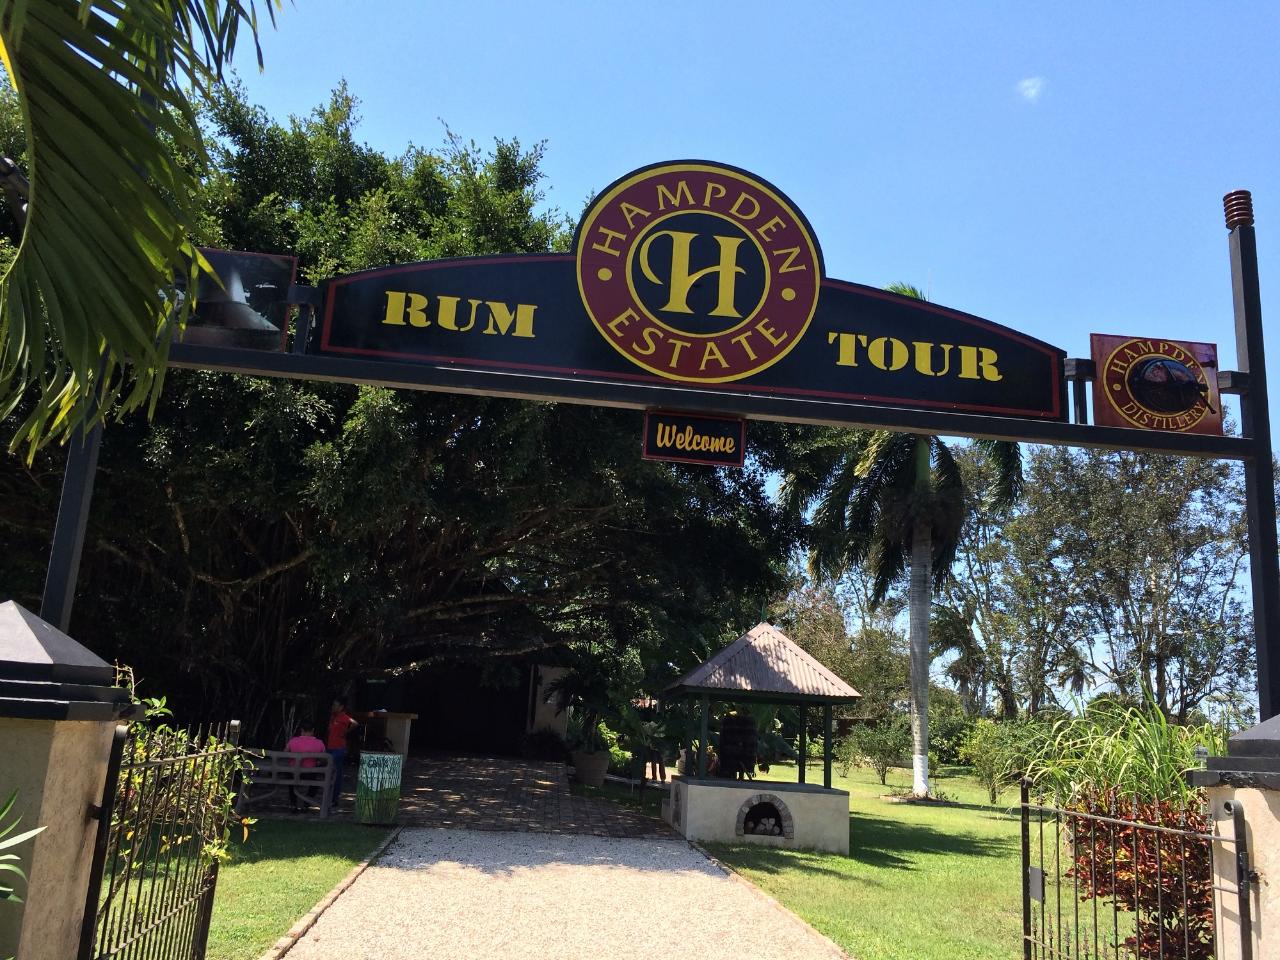 Hampden Estate Rum Tour and Lunch